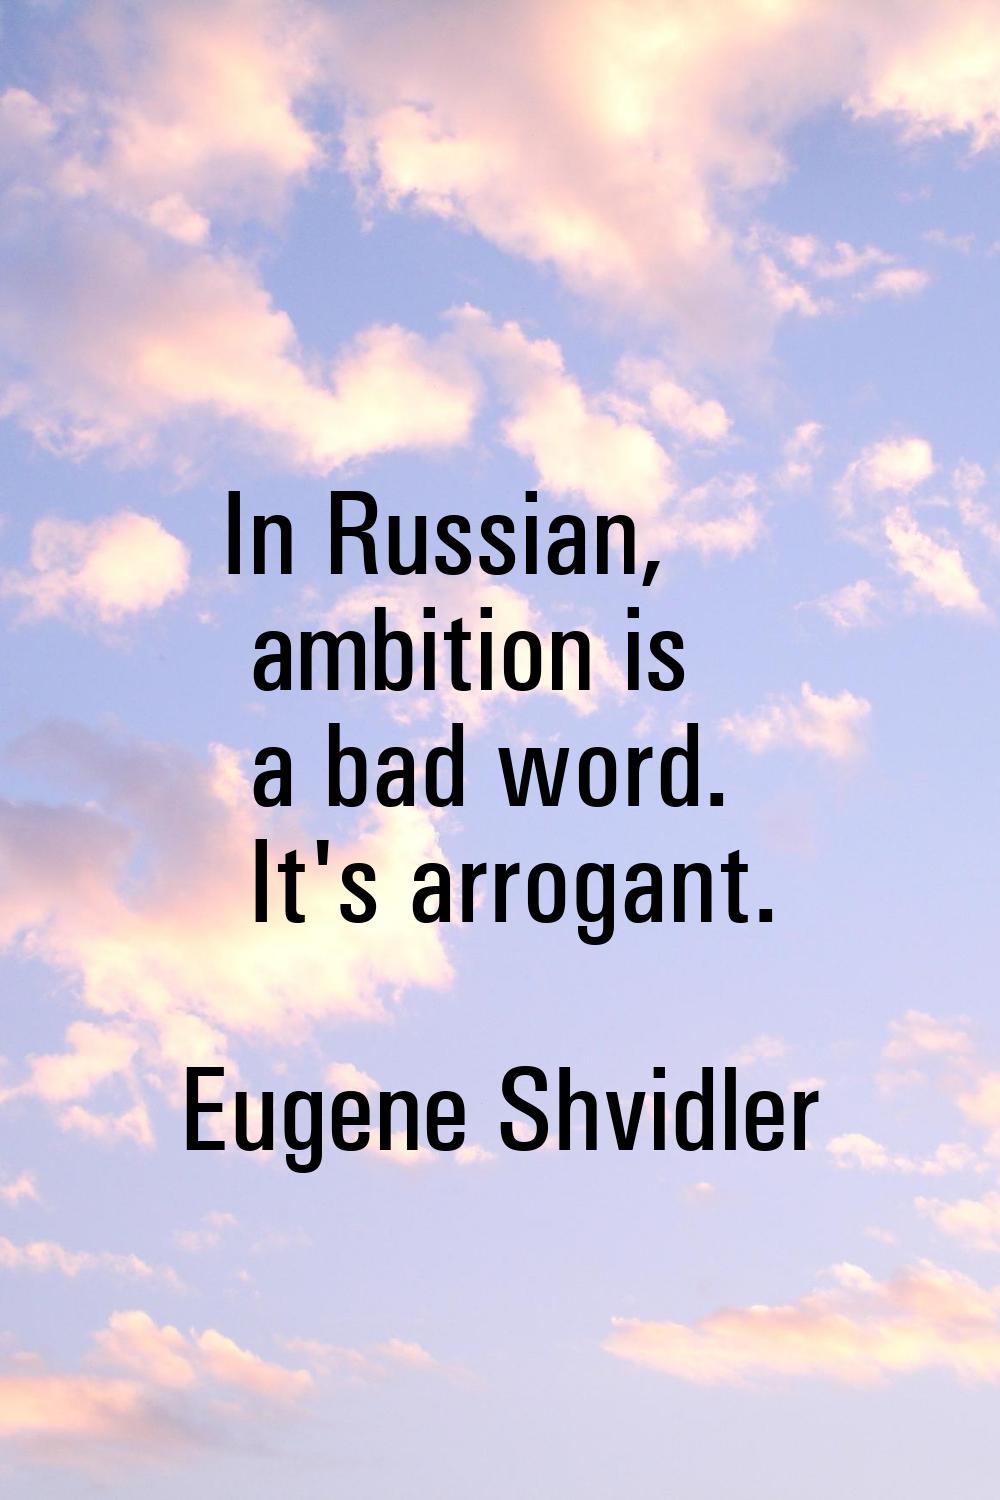 In Russian, ambition is a bad word. It's arrogant.